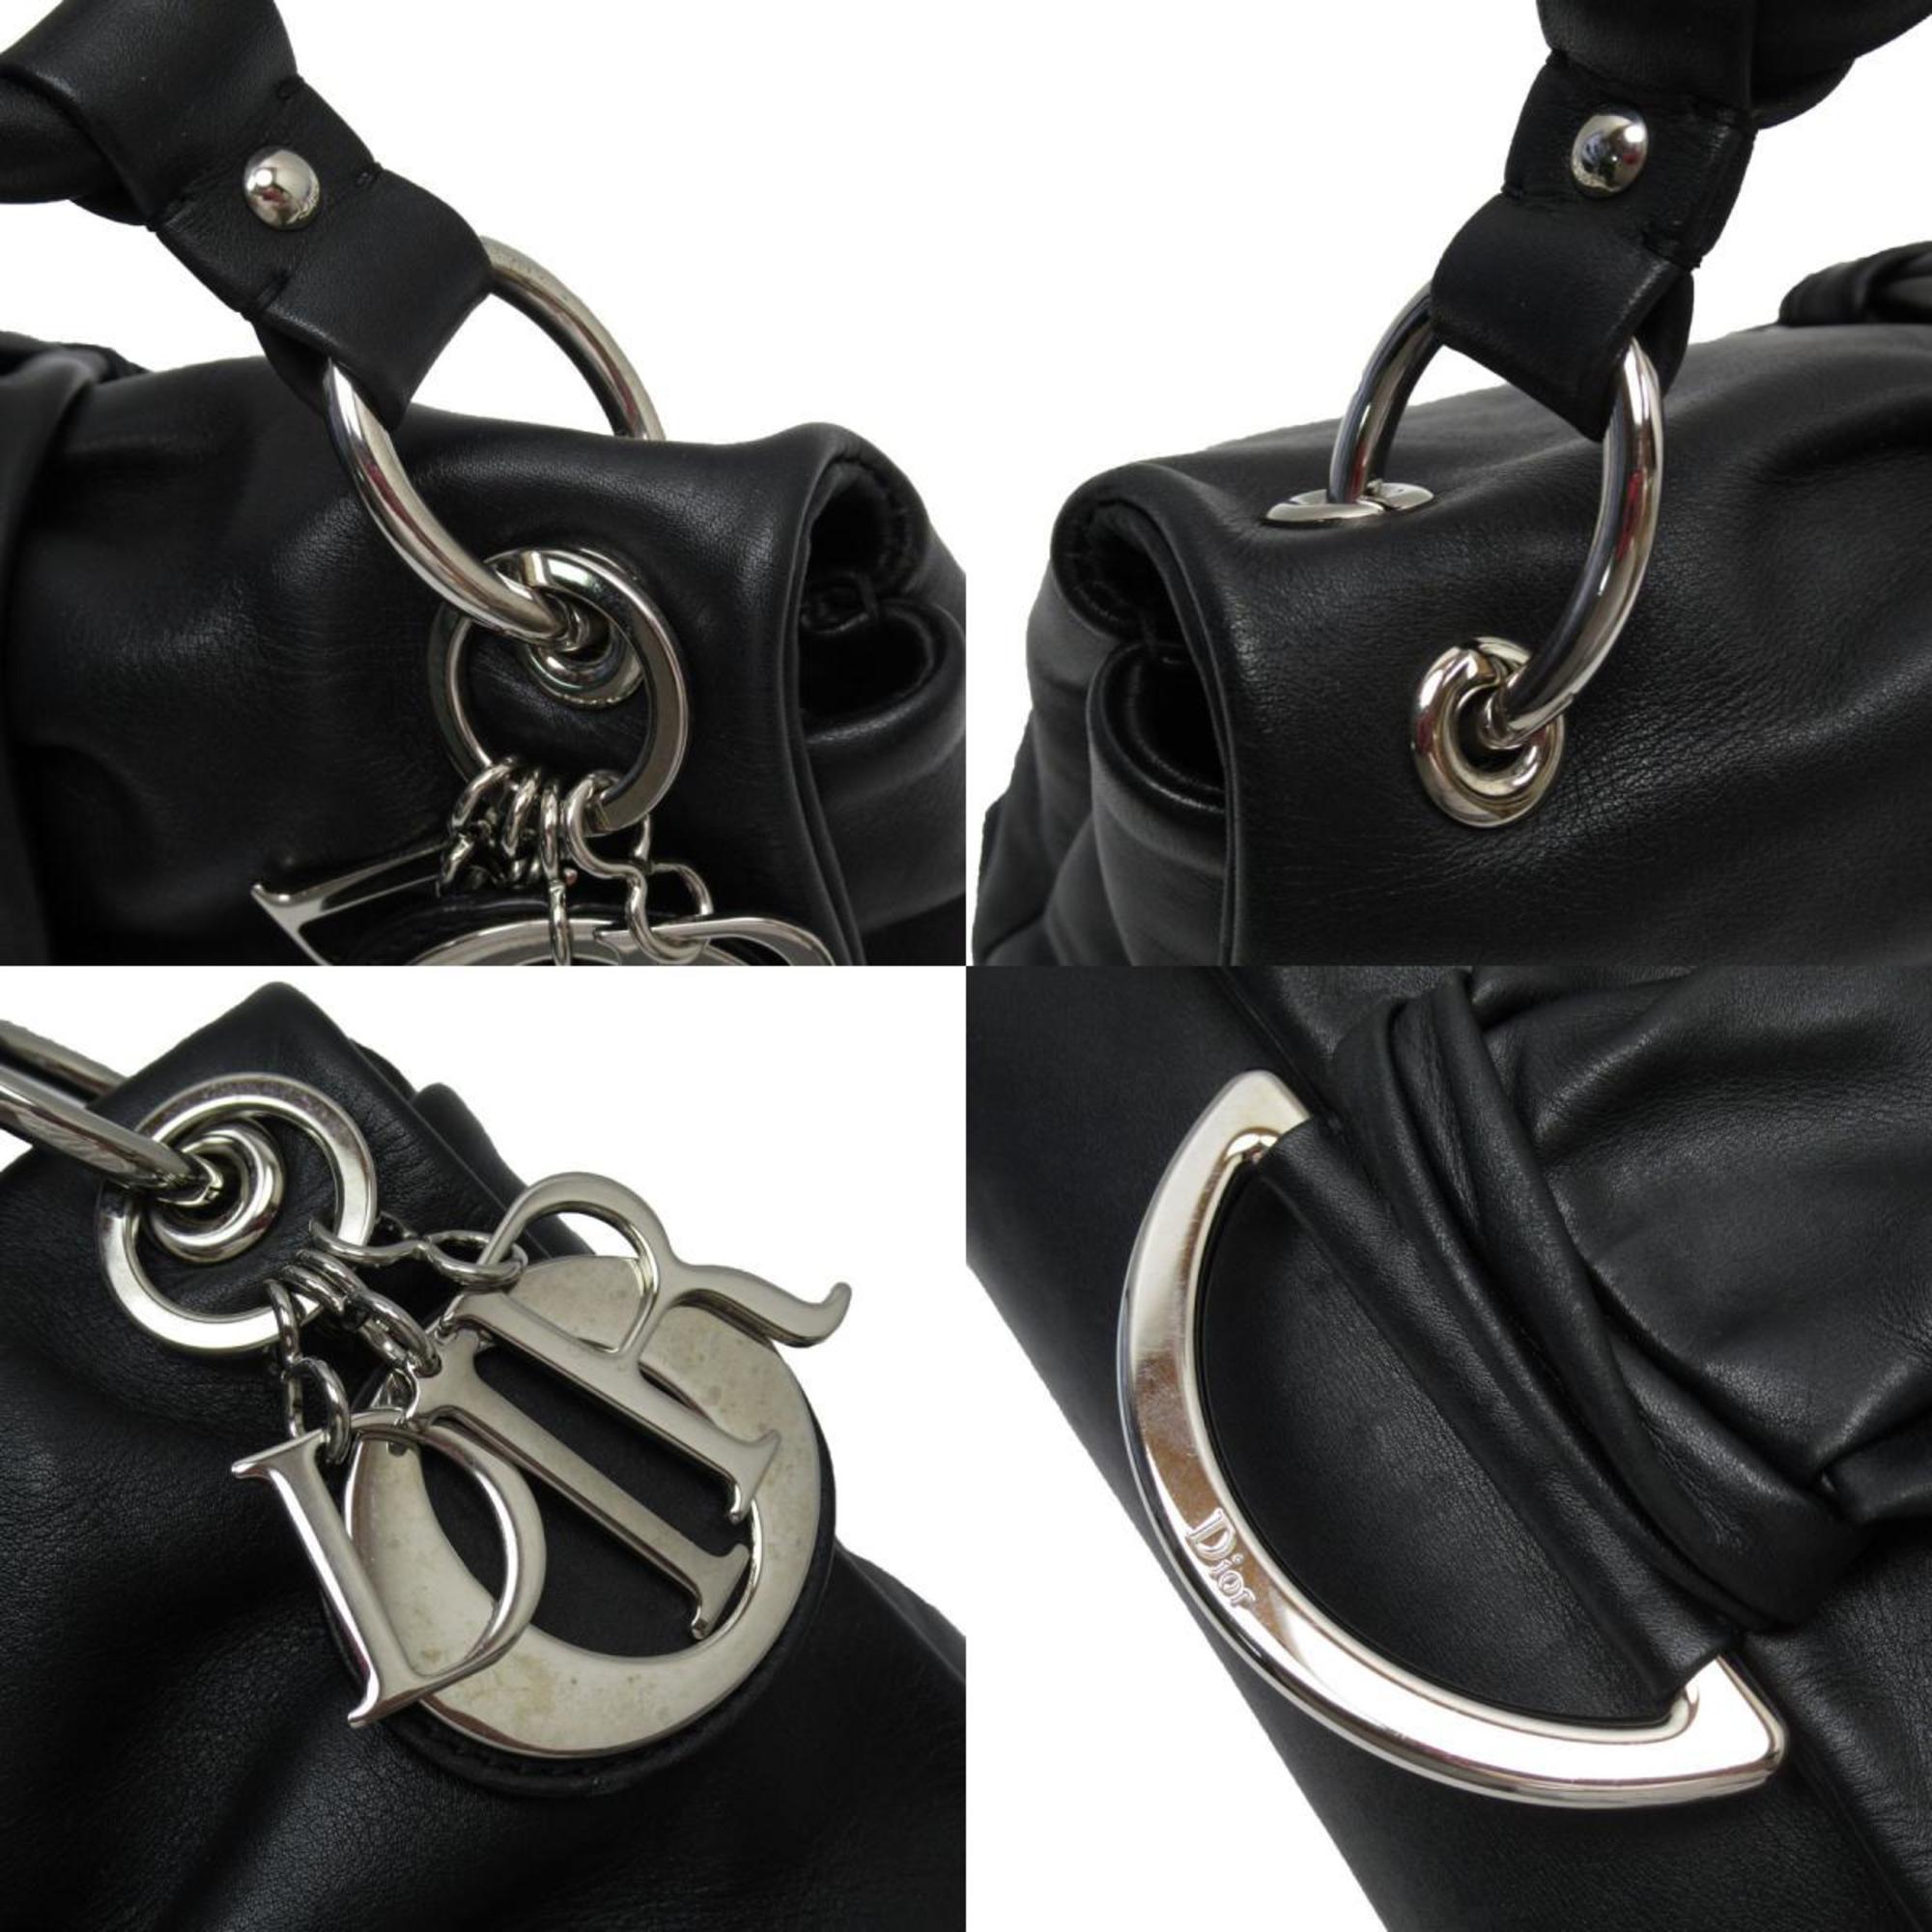 Christian Dior Shoulder Bag Leather Black Silver Women's W0267G